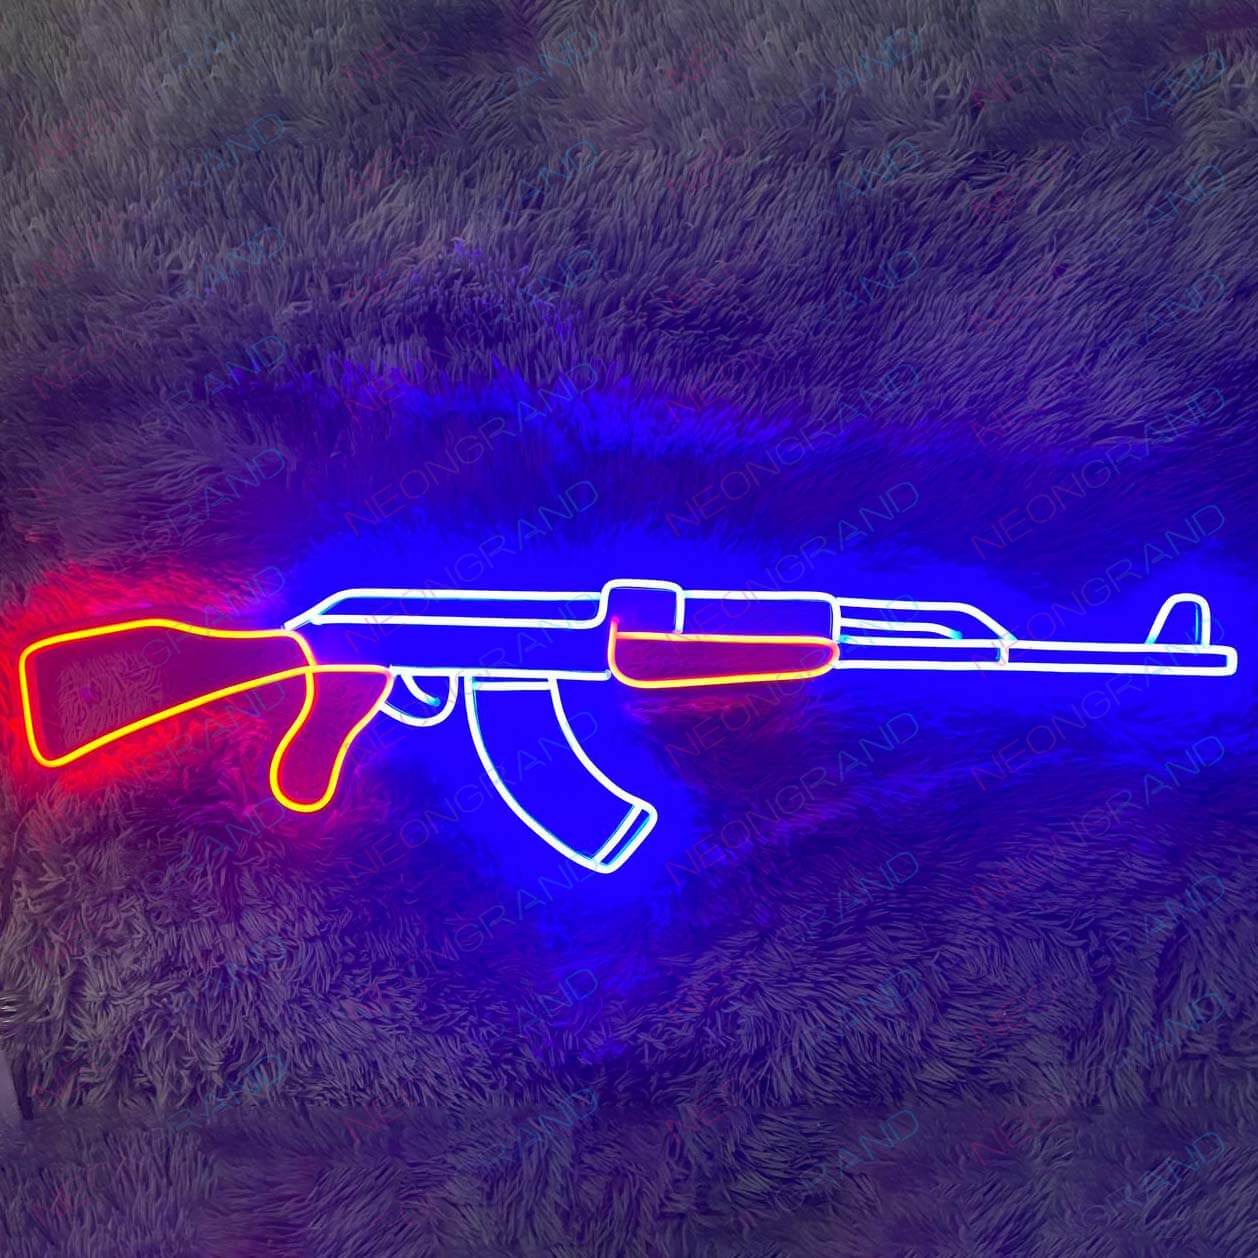 AK 47 Neon Sign Gun Pistol Game Led Light wm2